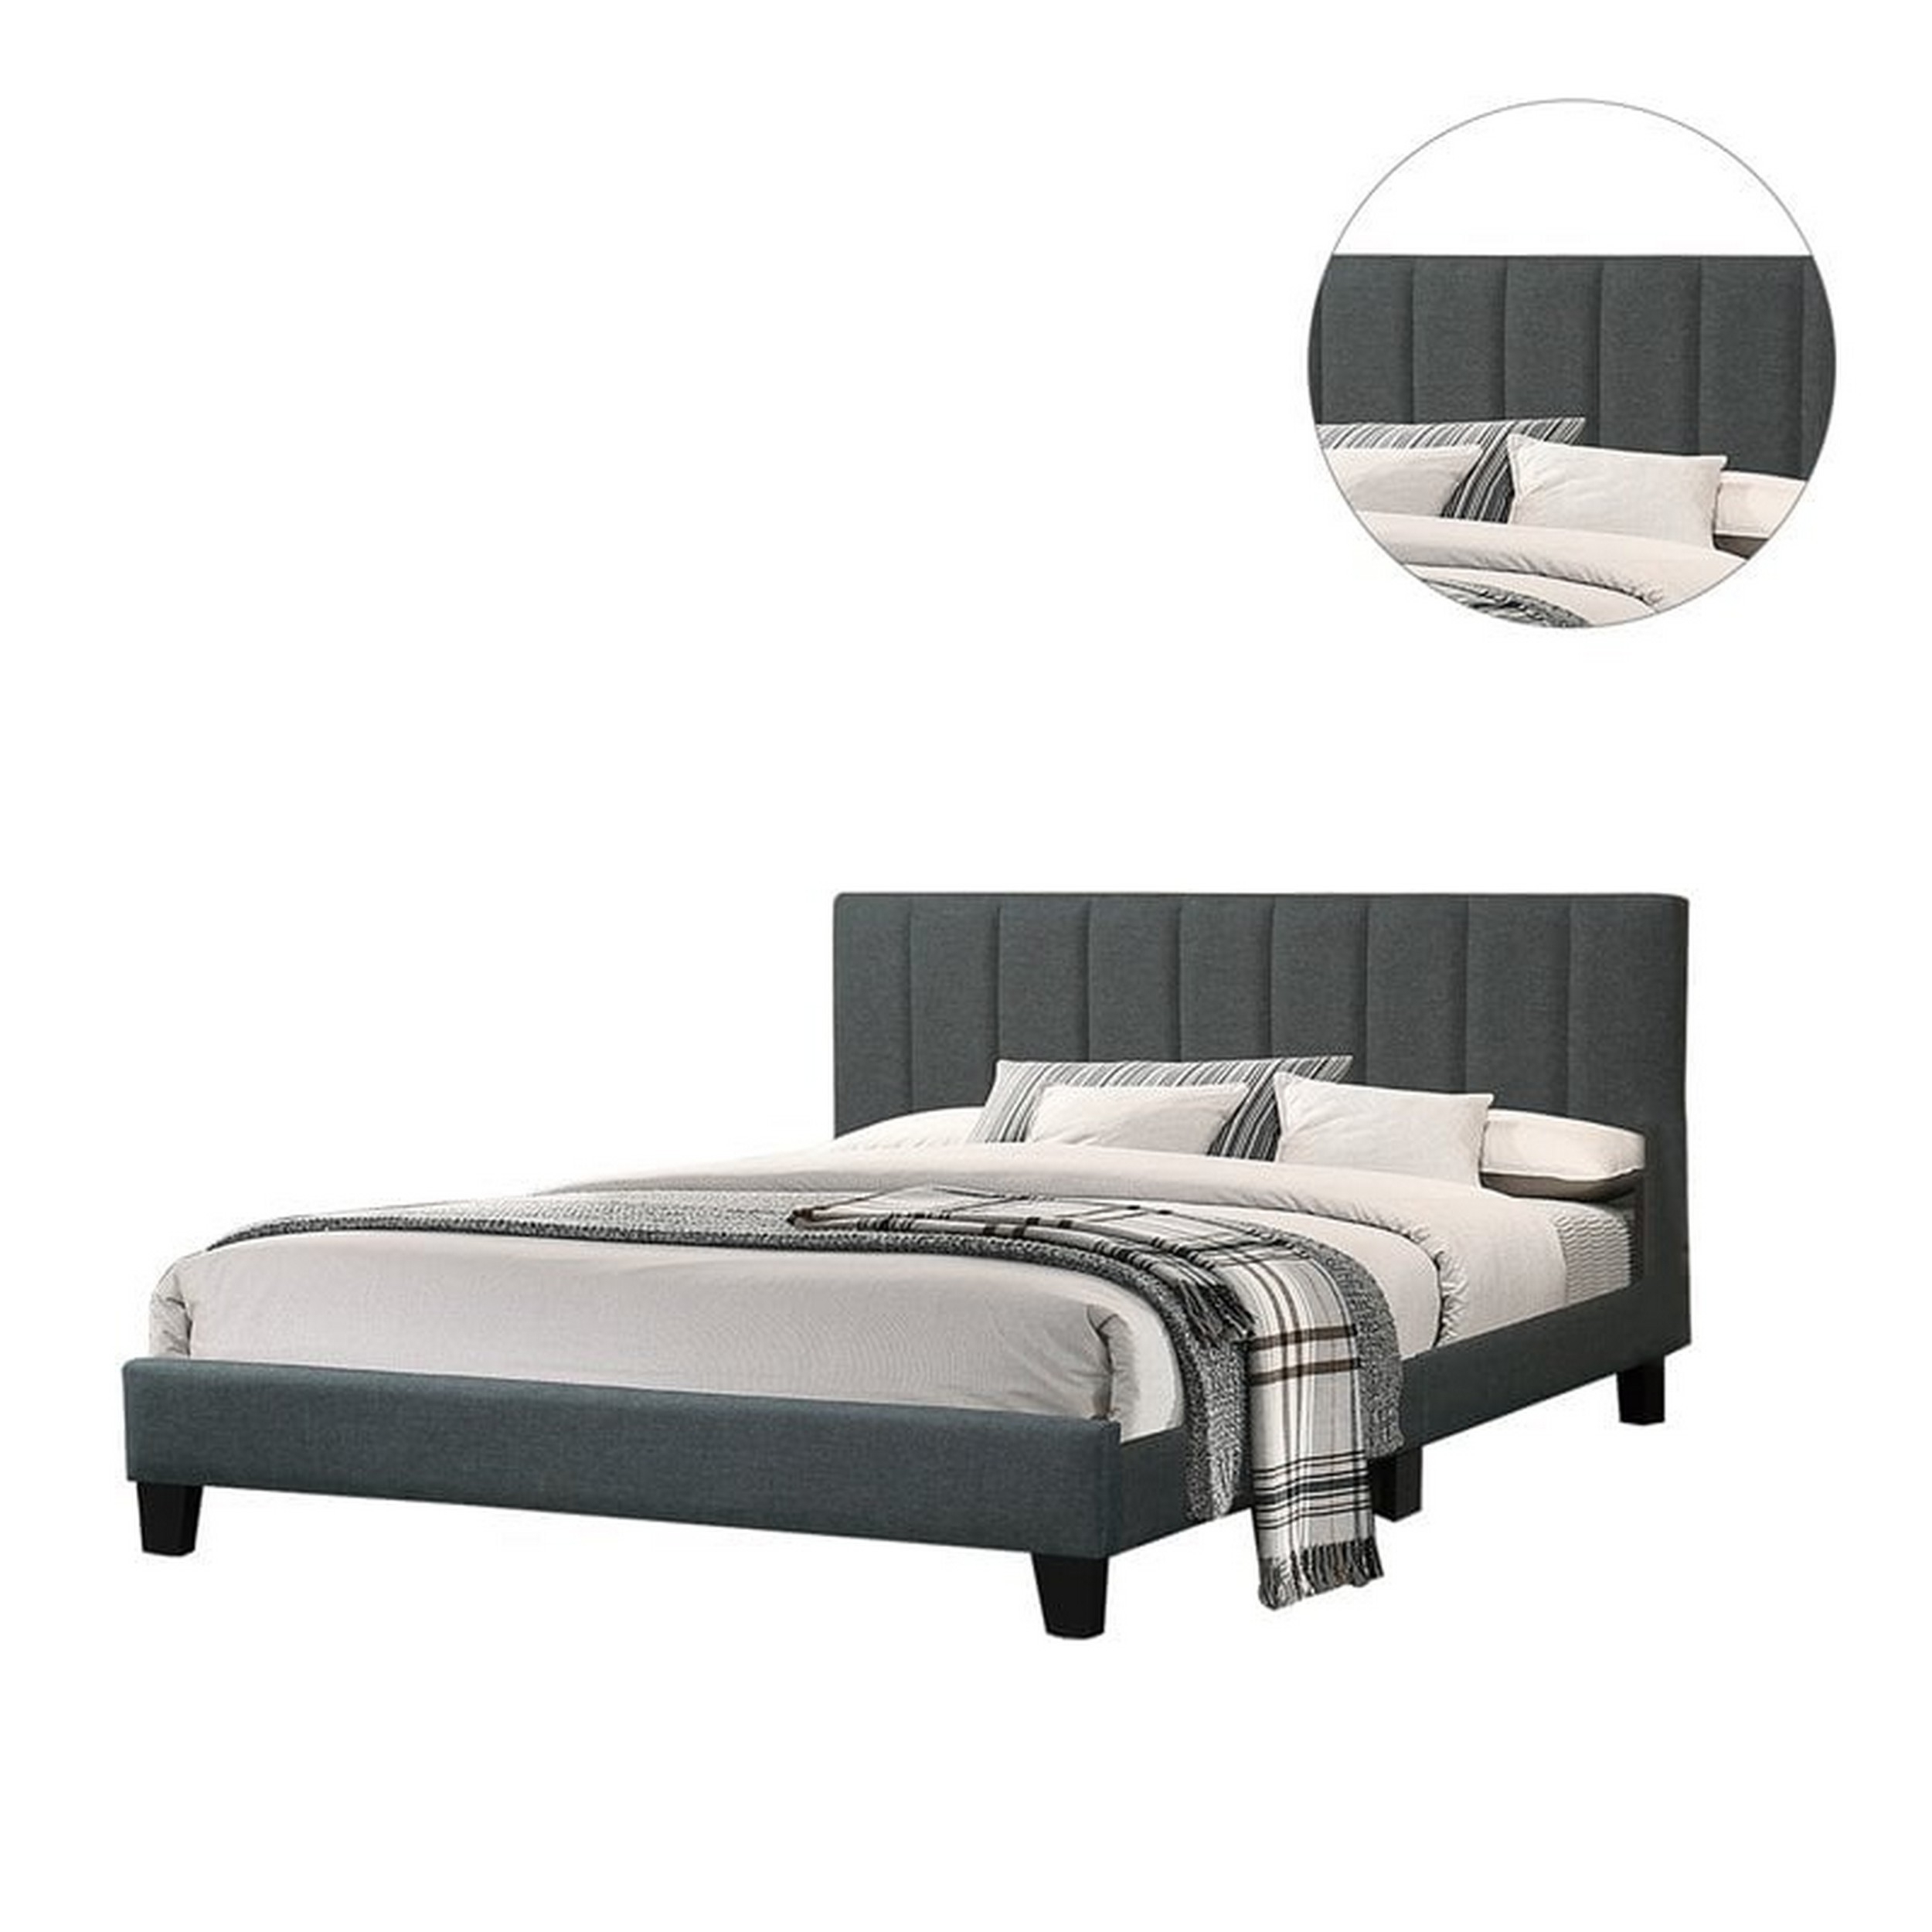 Dex Modern Platform Full Size Bed, Plush Tufted Upholstery, Charcoal Gray- Saltoro Sherpi